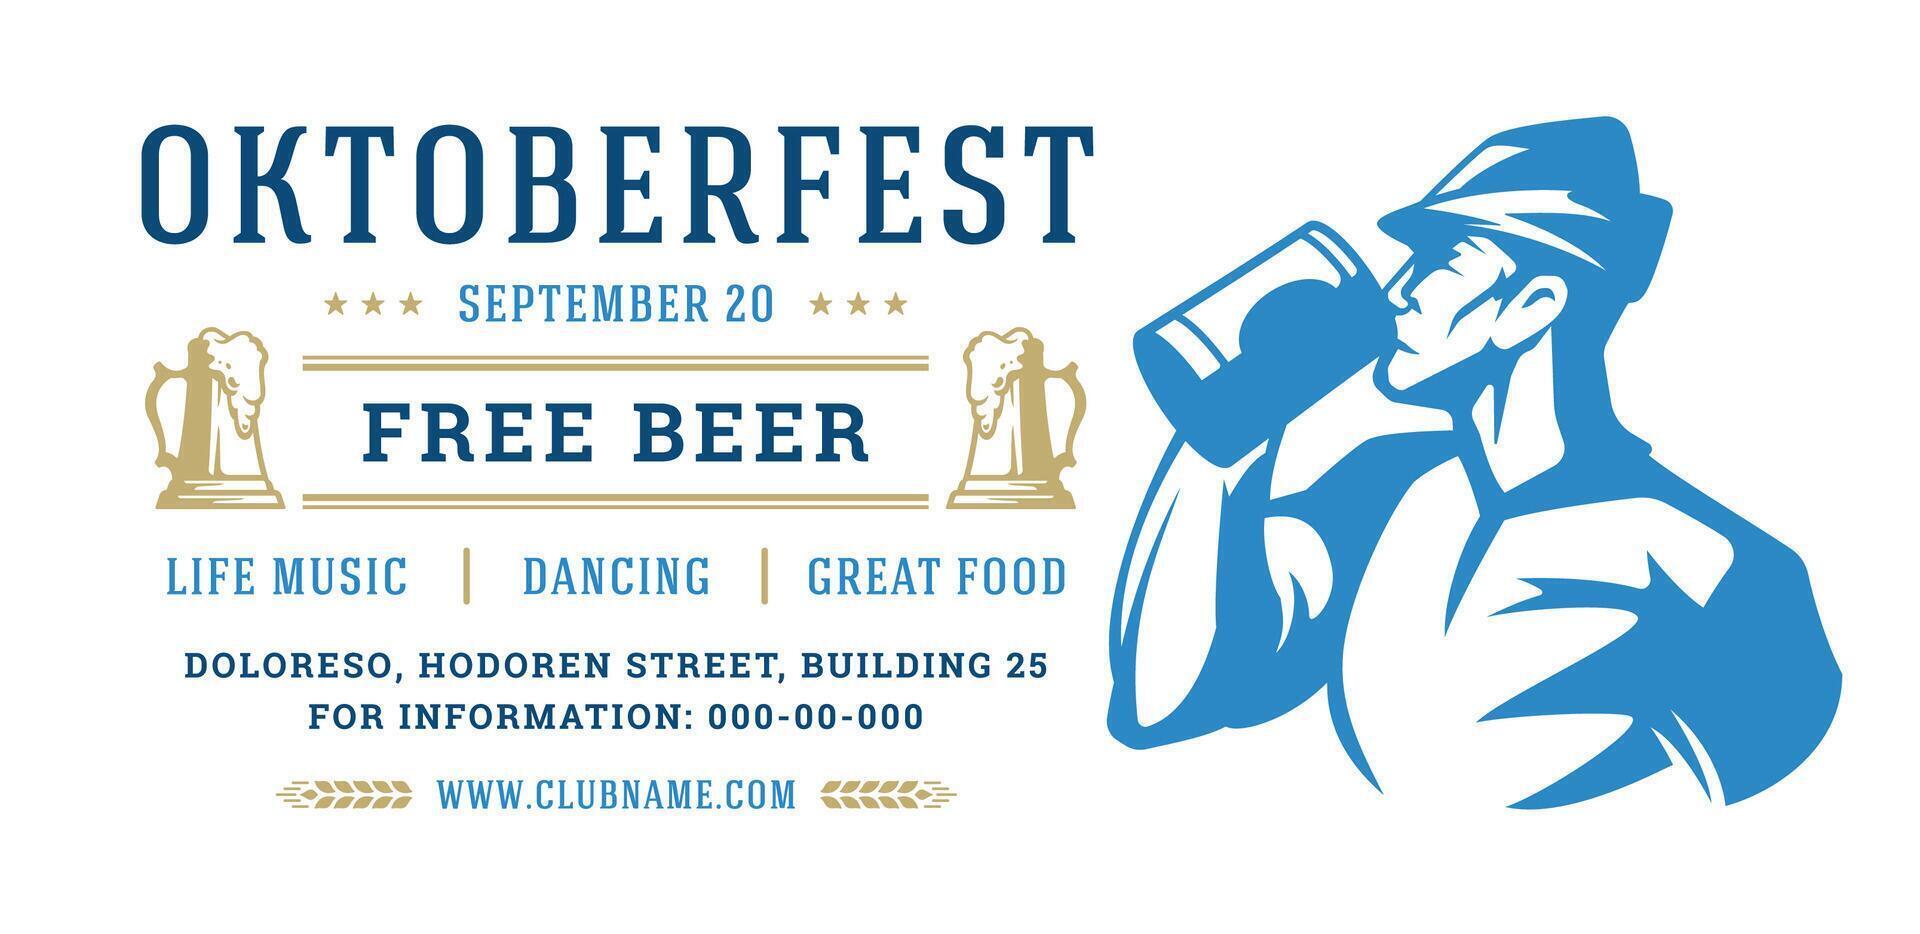 Oktoberfest volantes o bandera retro tipografía modelo diseño willkommen zum invitación cerveza festival celebracion. vector